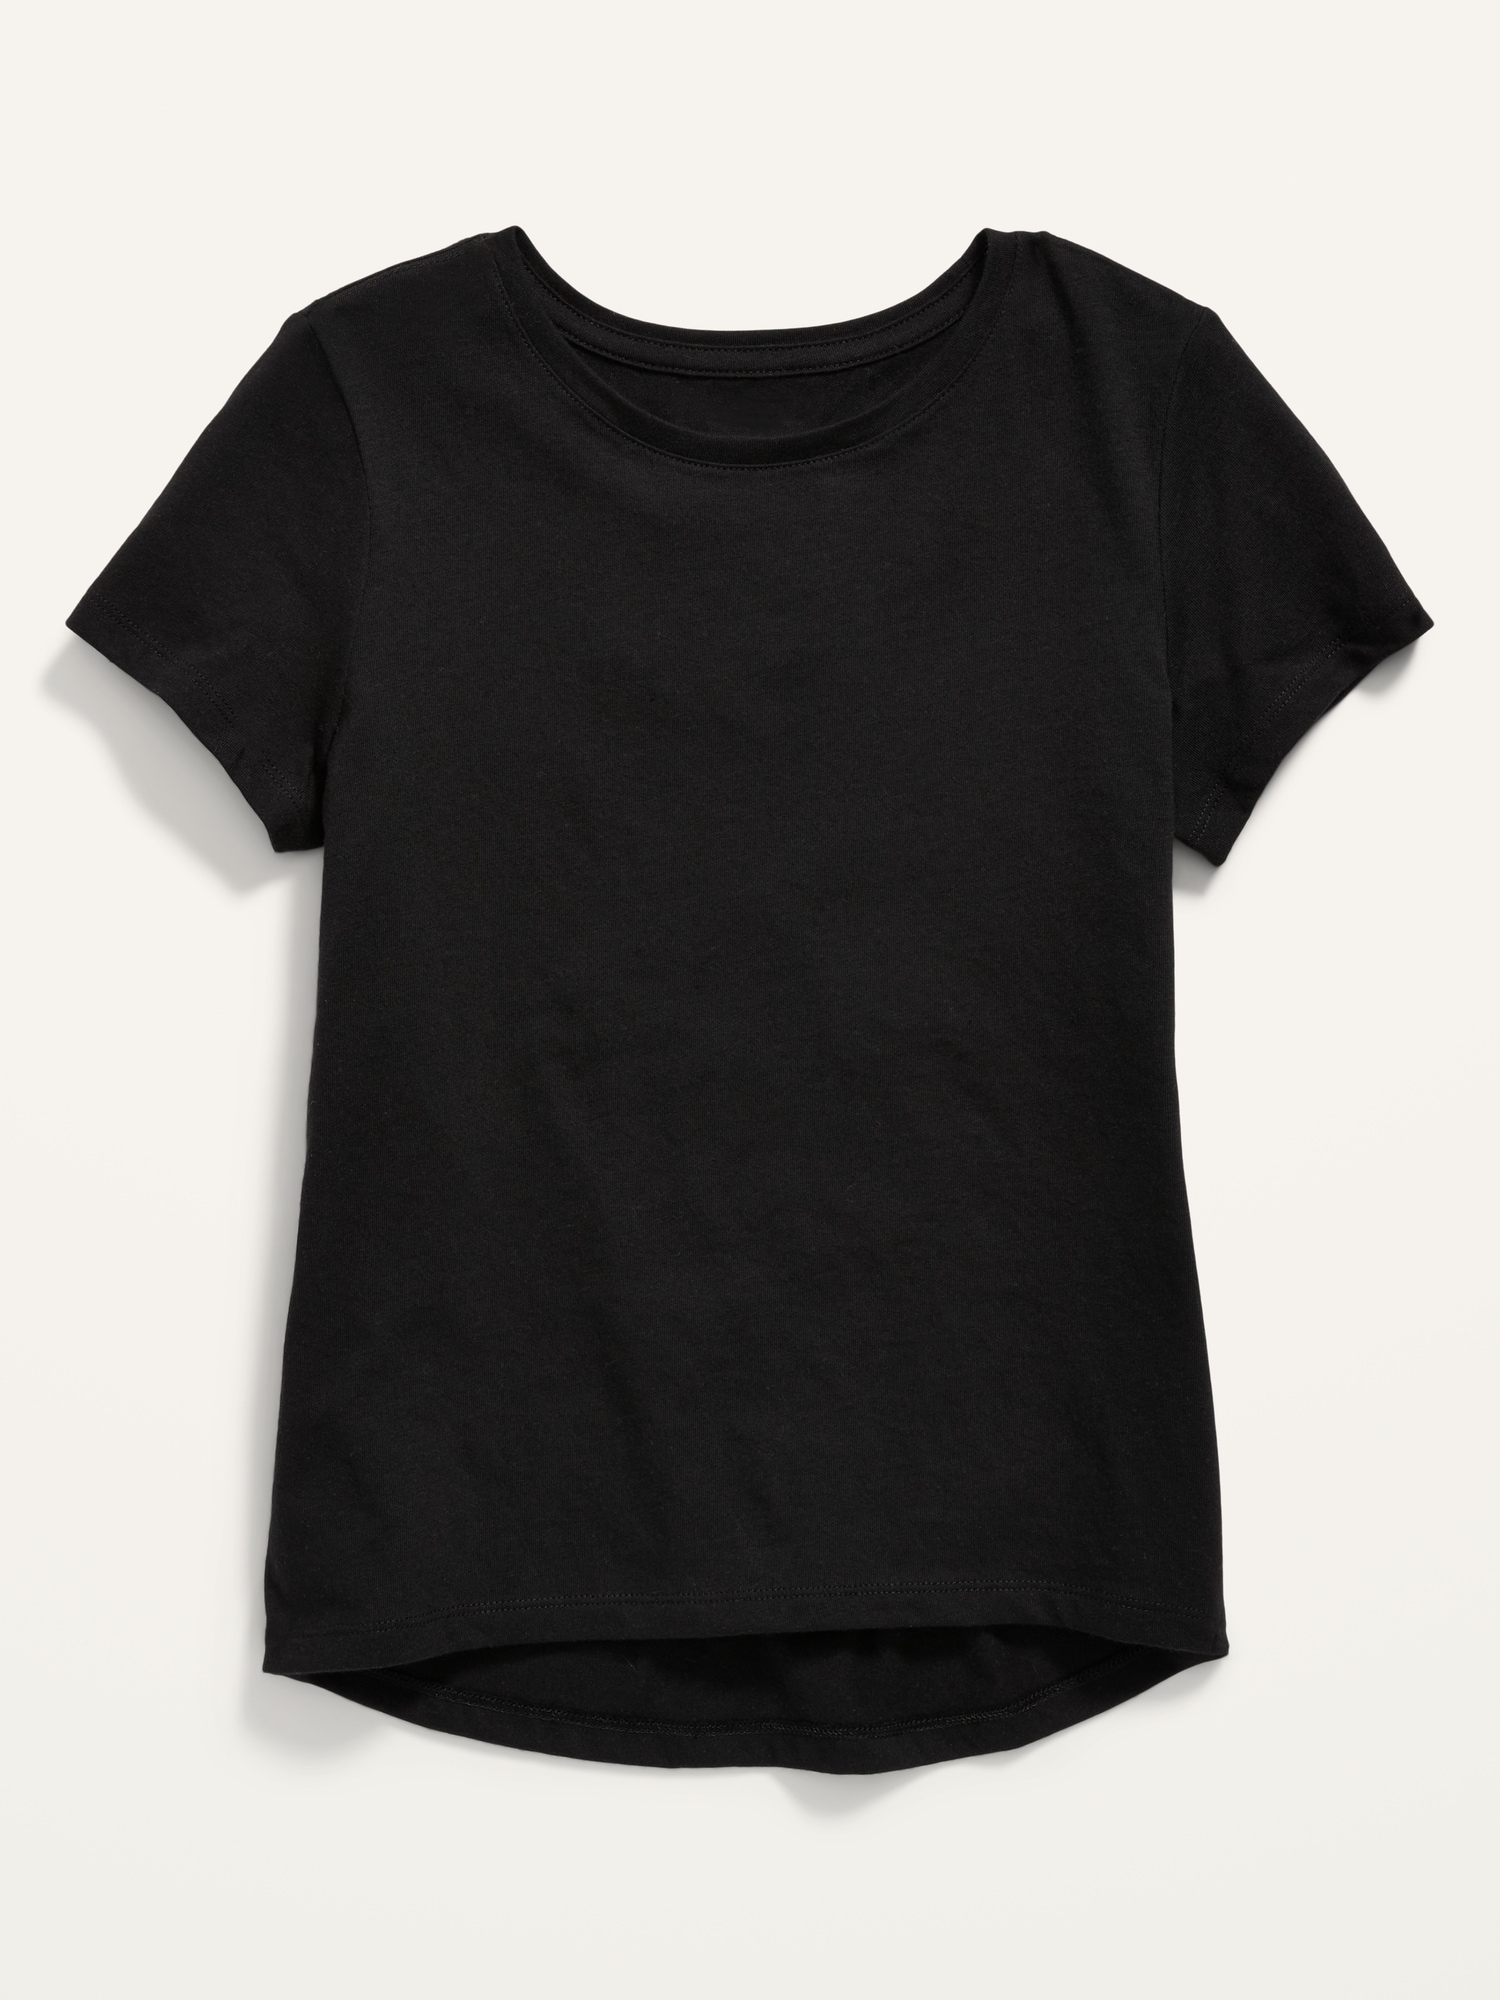 Old Navy Softest Short-Sleeve T-Shirt for Girls black. 1